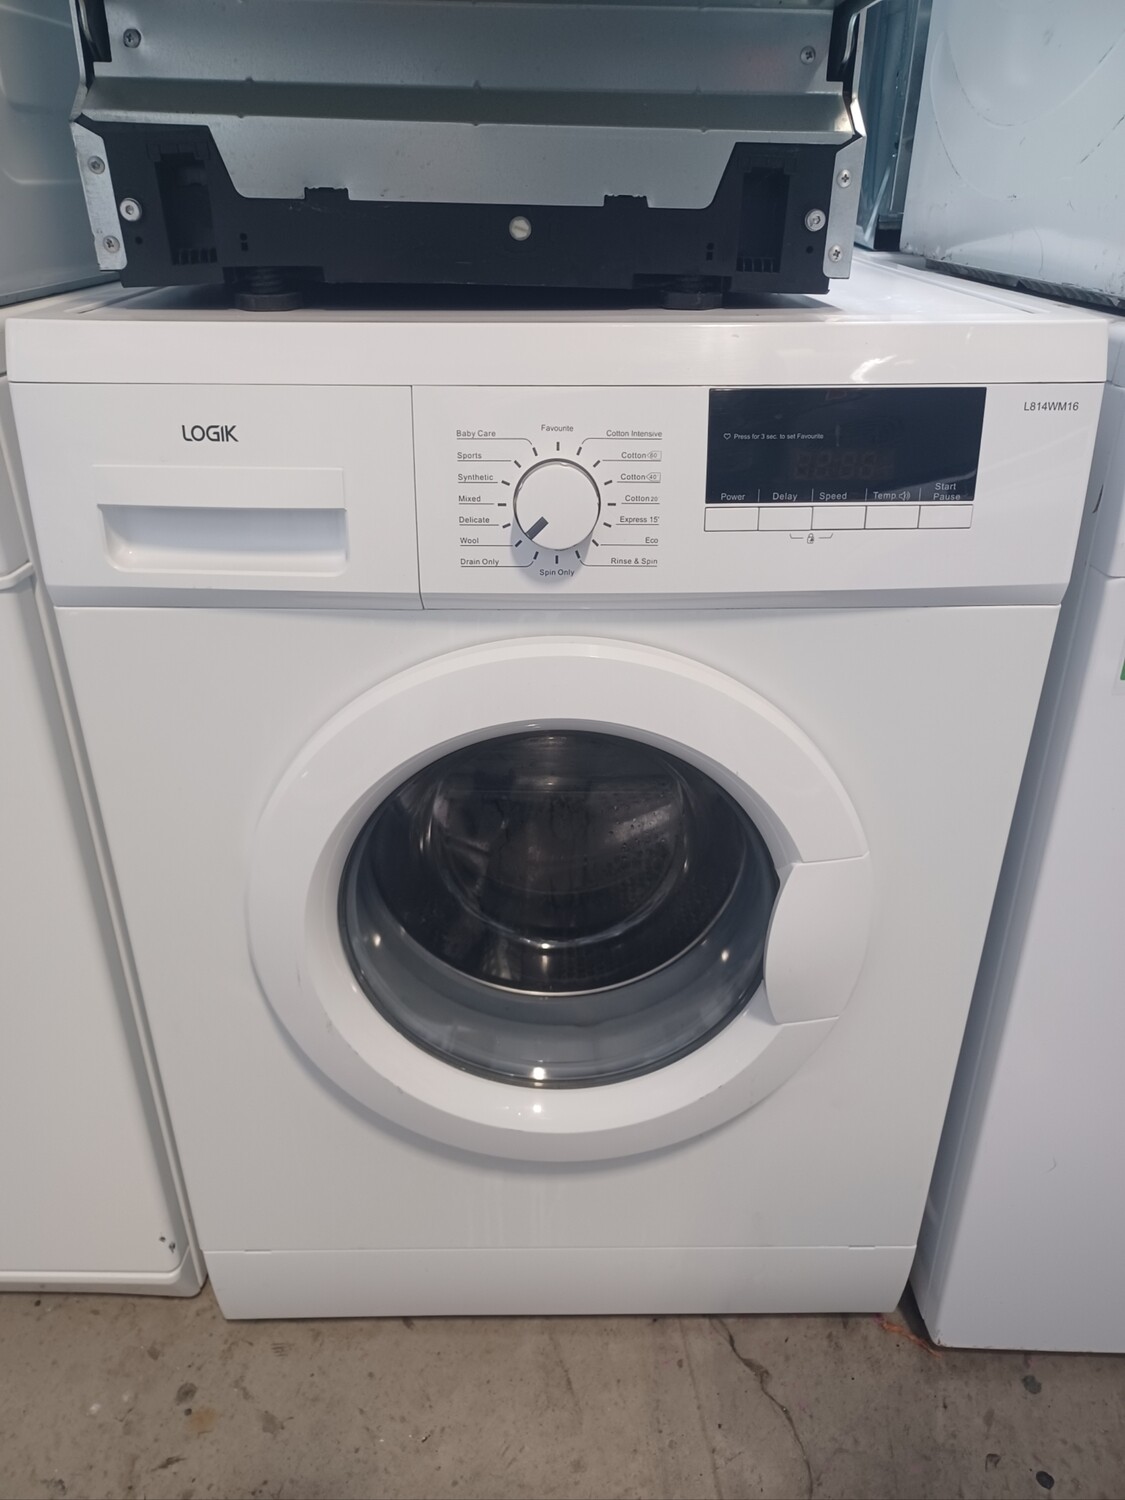 Logik L814WM16 8KG 1400 Spin Washing Machine White 15 Minute Quick Wash Refurbished 